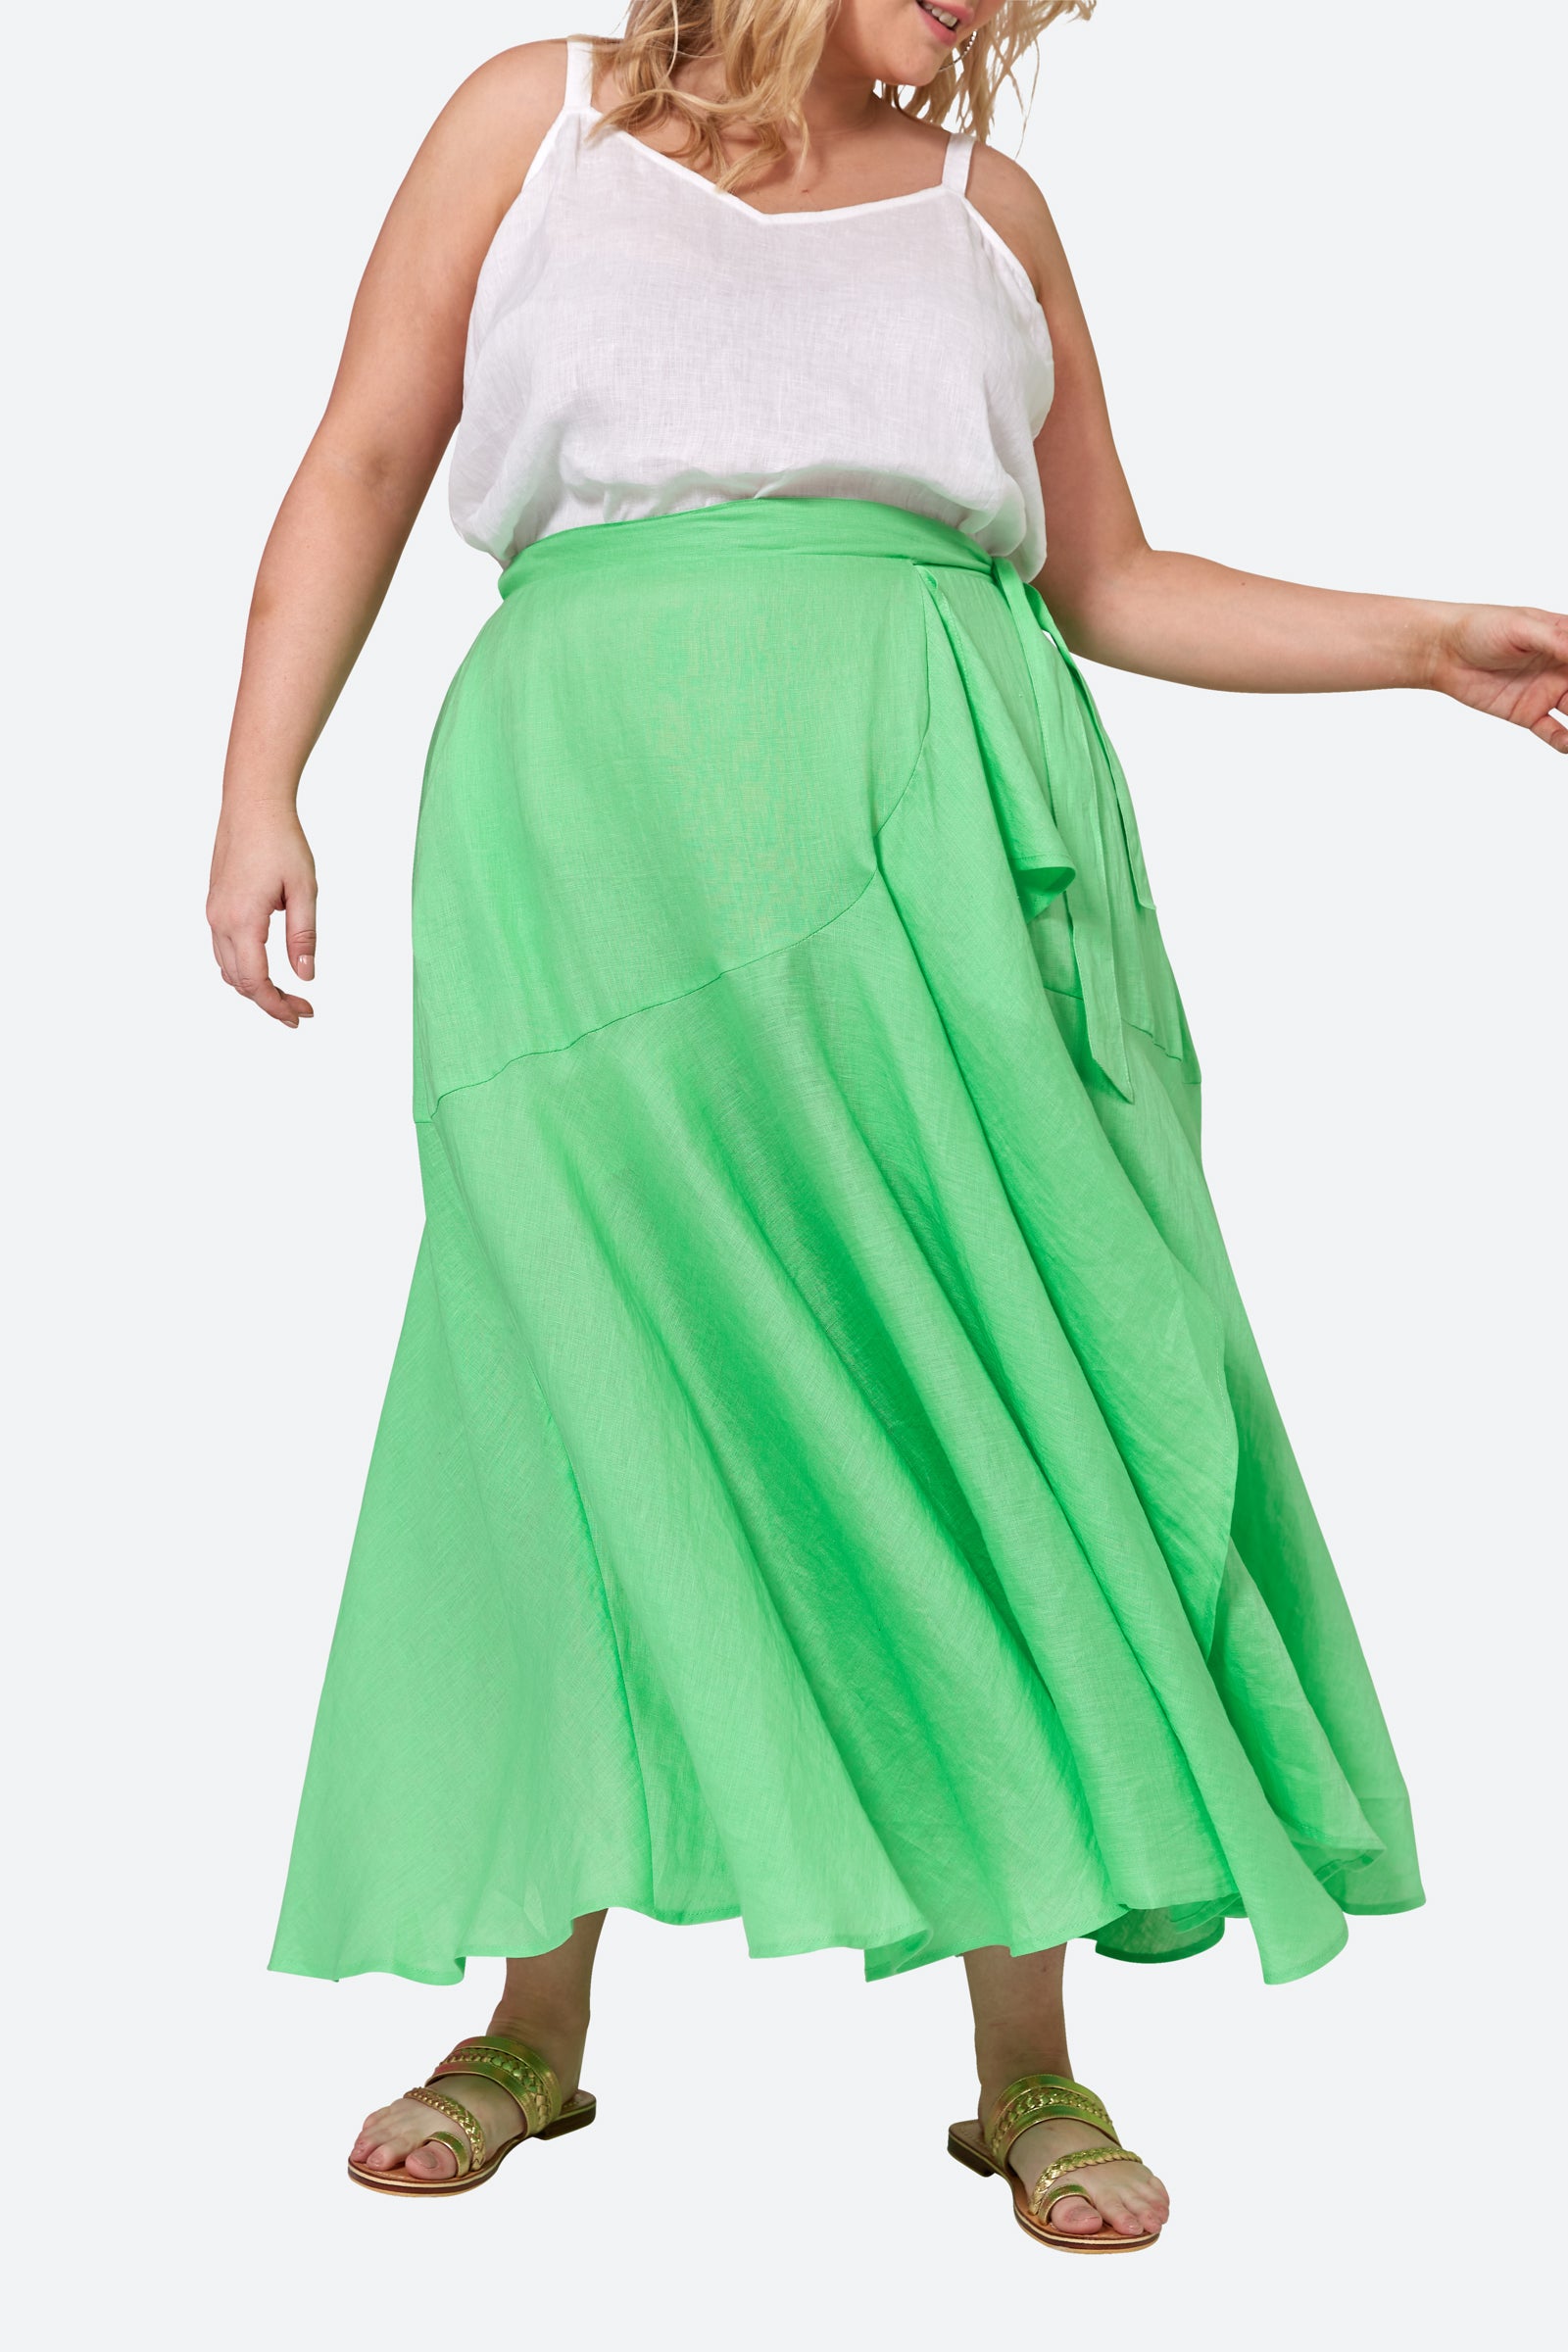 La Vie Wrap Skirt - Kiwi - eb&ive Clothing - Skirt Mid Linen